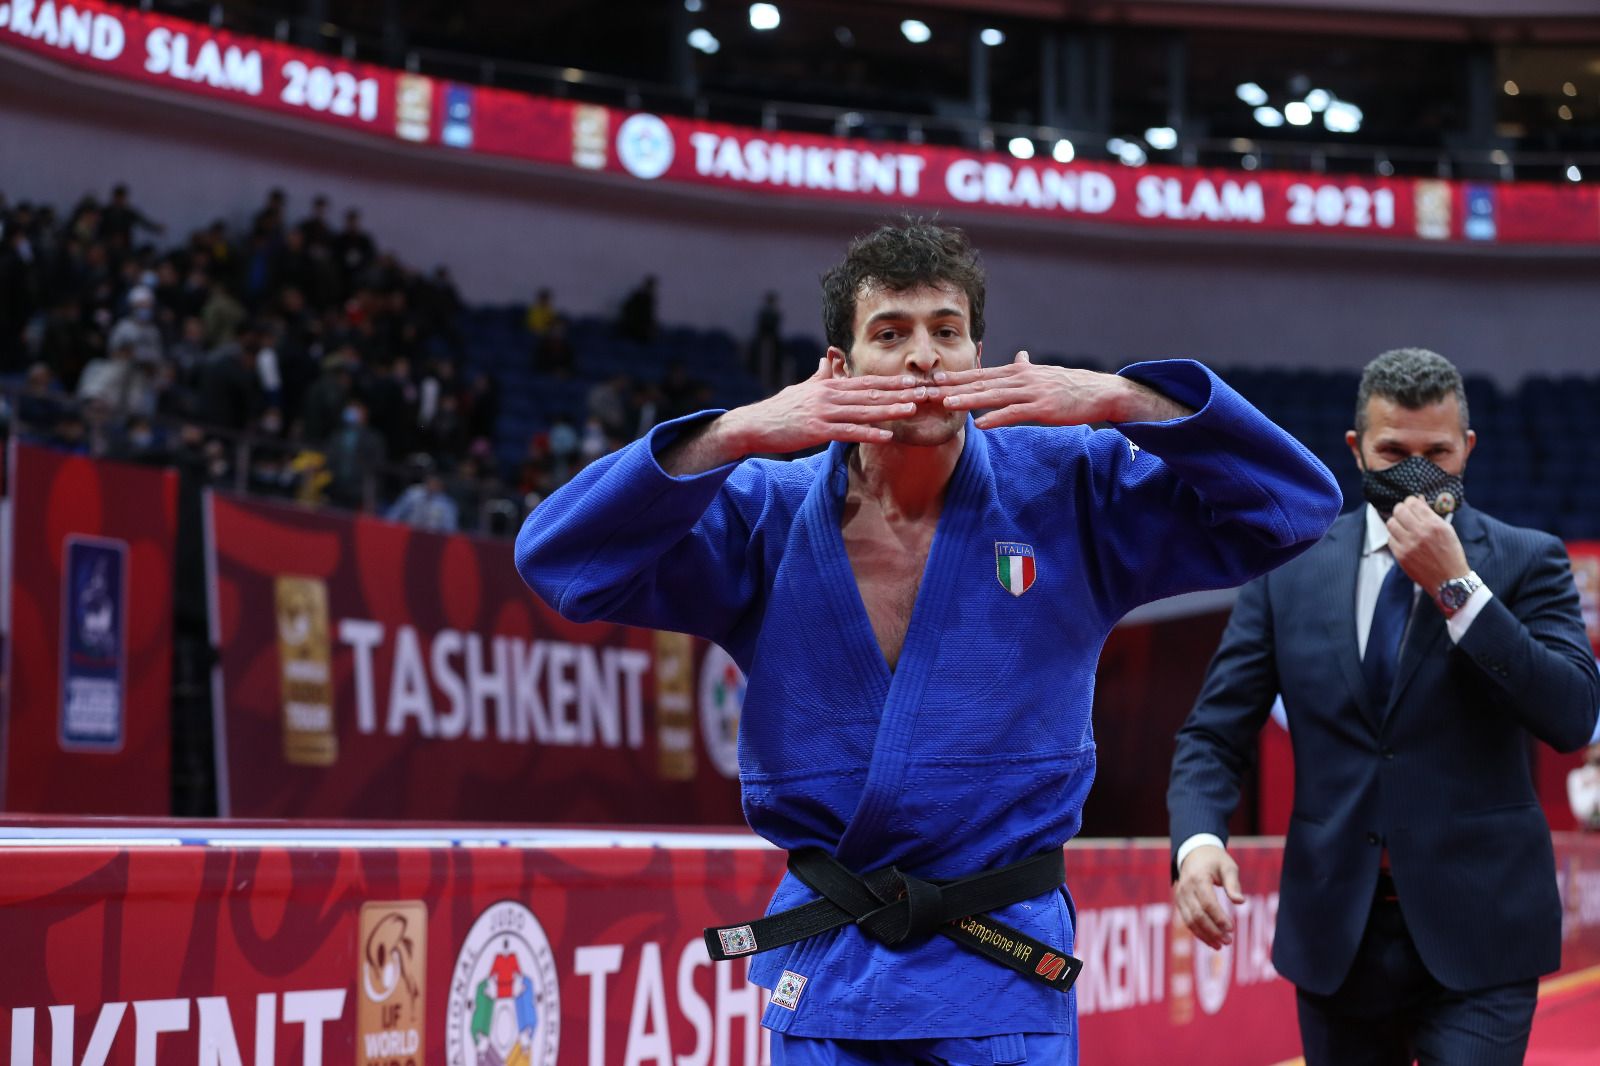 Europei: Parlati di bronzo nei -81 kg, terza medaglia azzurra a Lisbona 